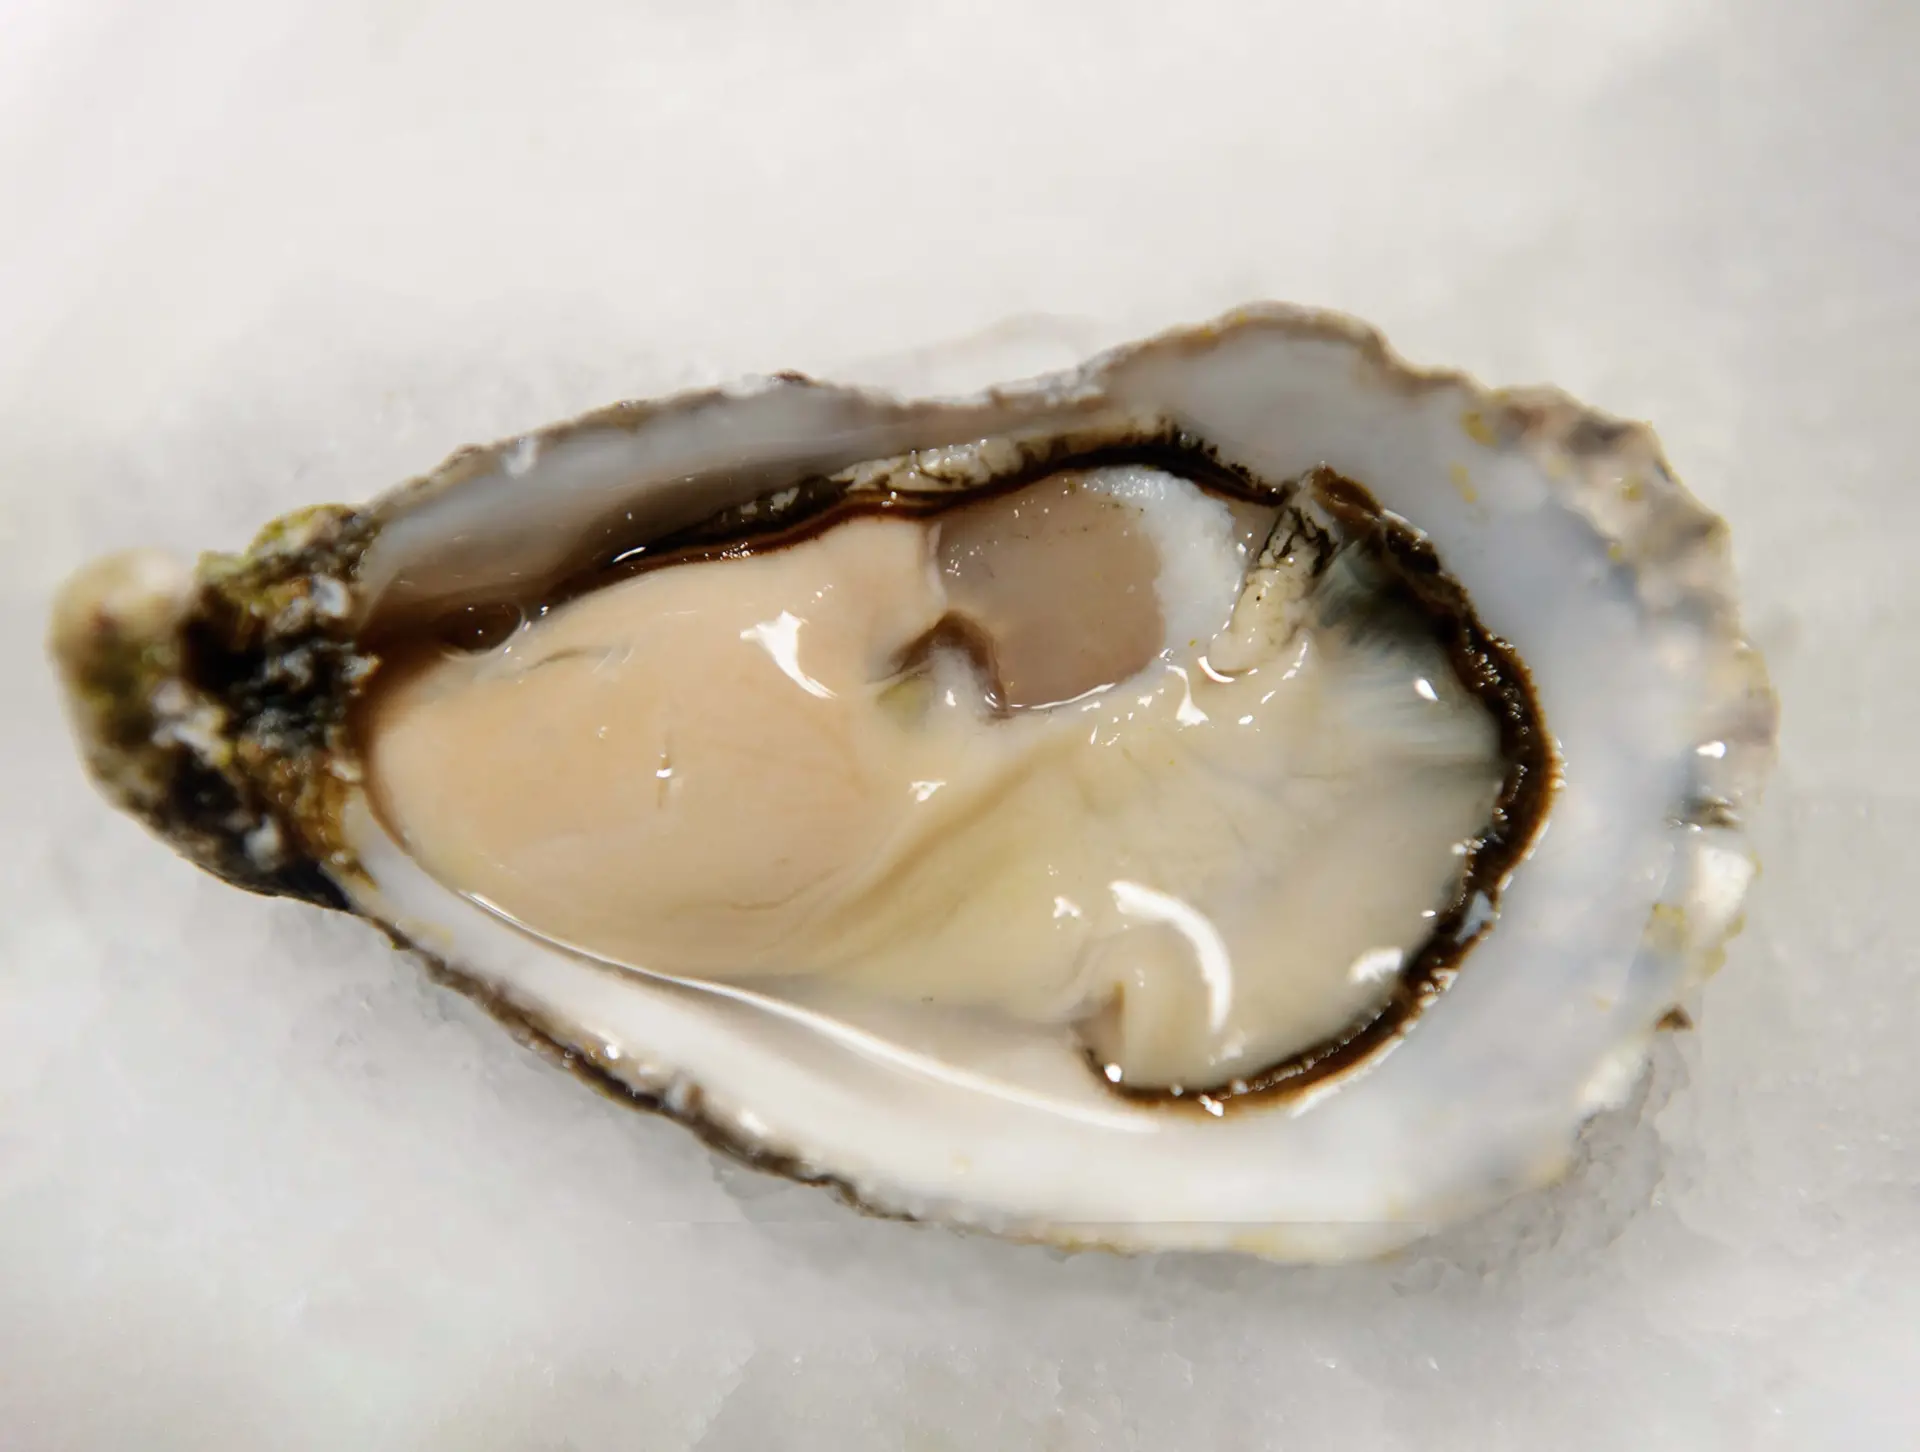 Gillardeau, voor ons de mooiste oester